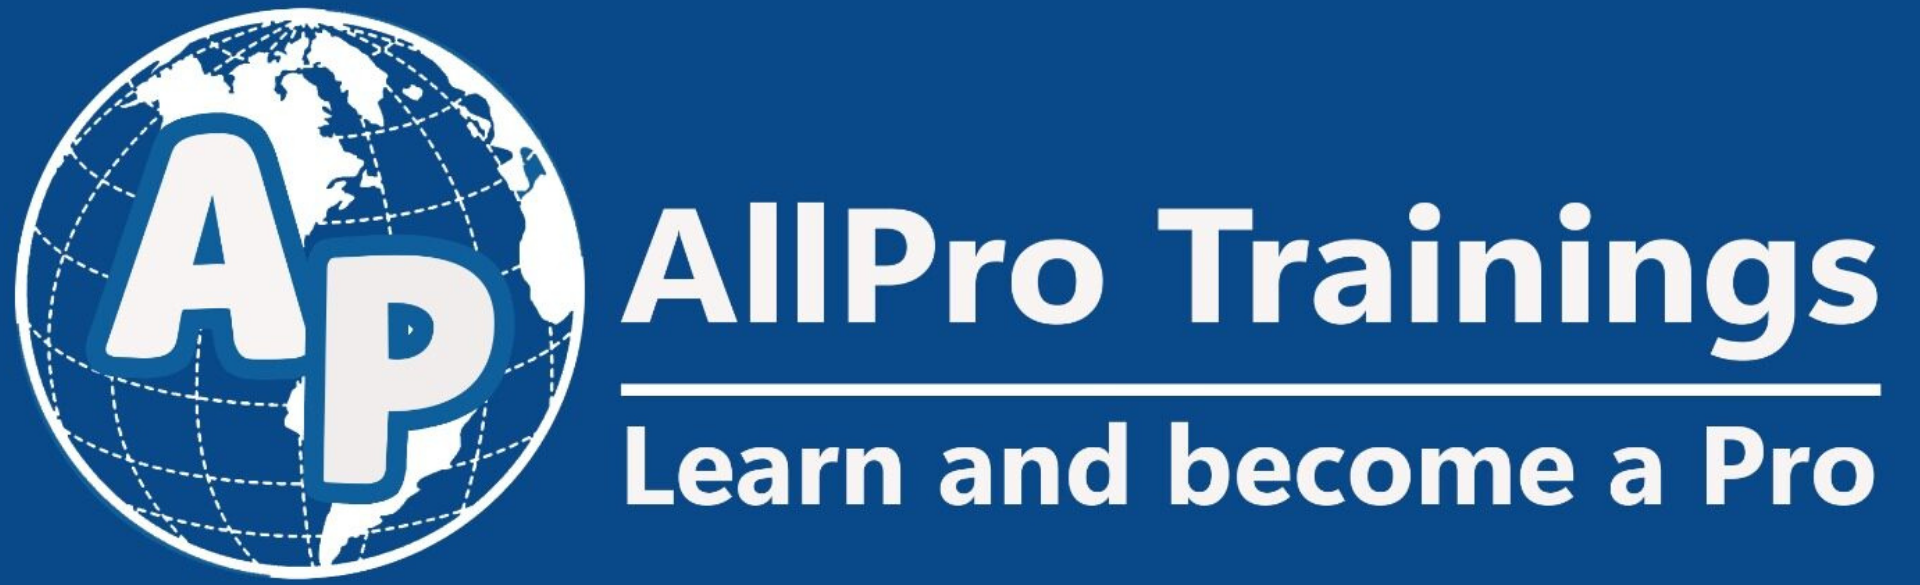 AllPro Trainings